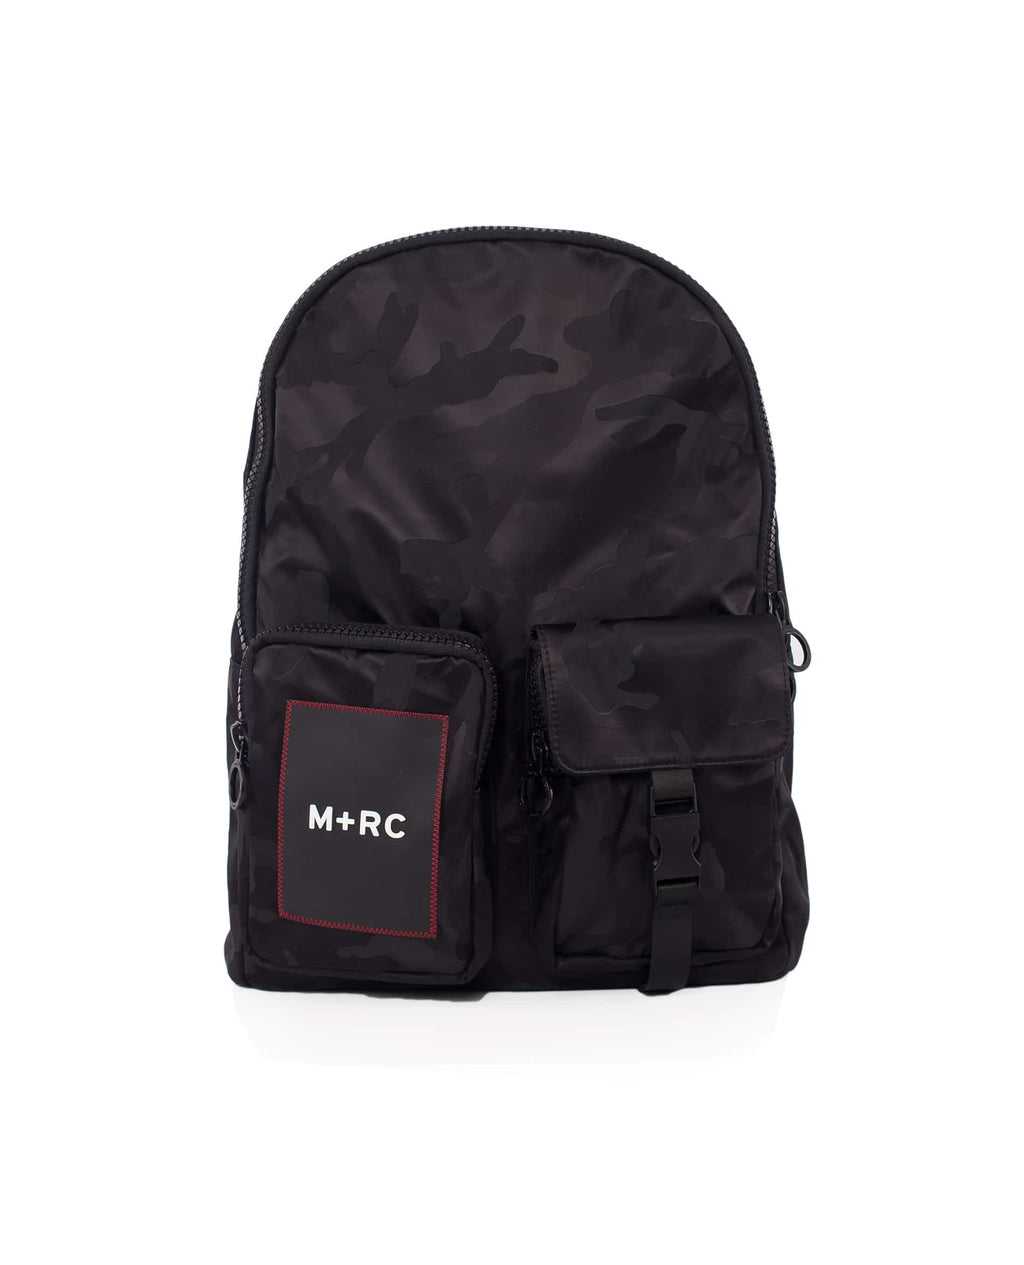 Black Hi-Tech Backpack